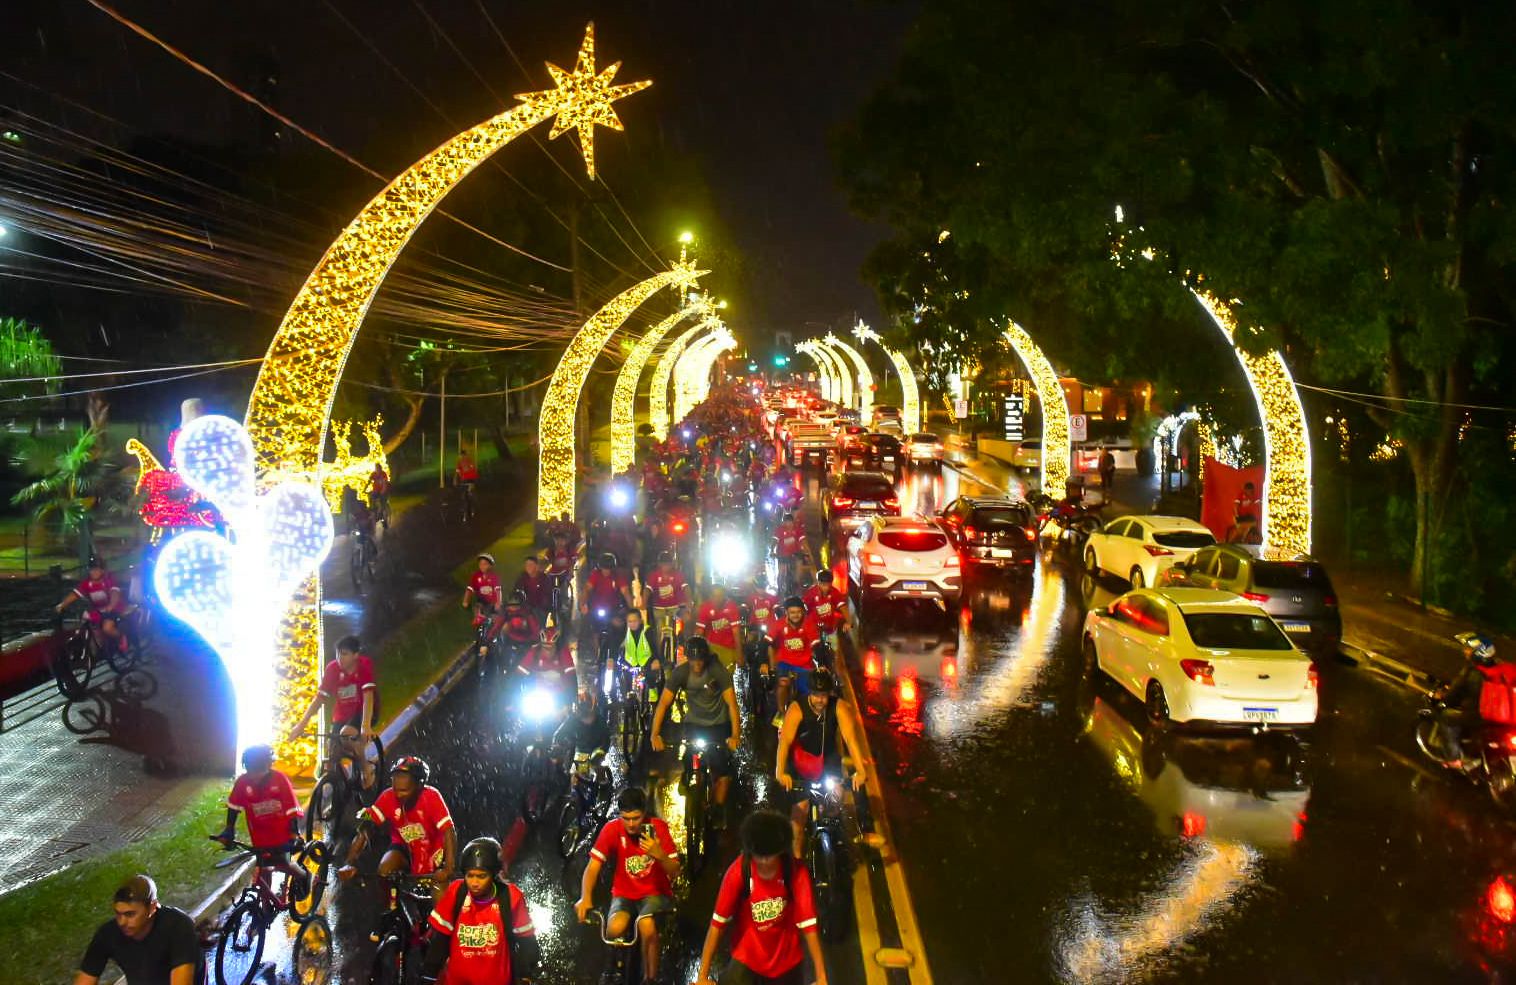 Bora de Bike - Especial Luzes de Natal marca entrega da capital iluminada